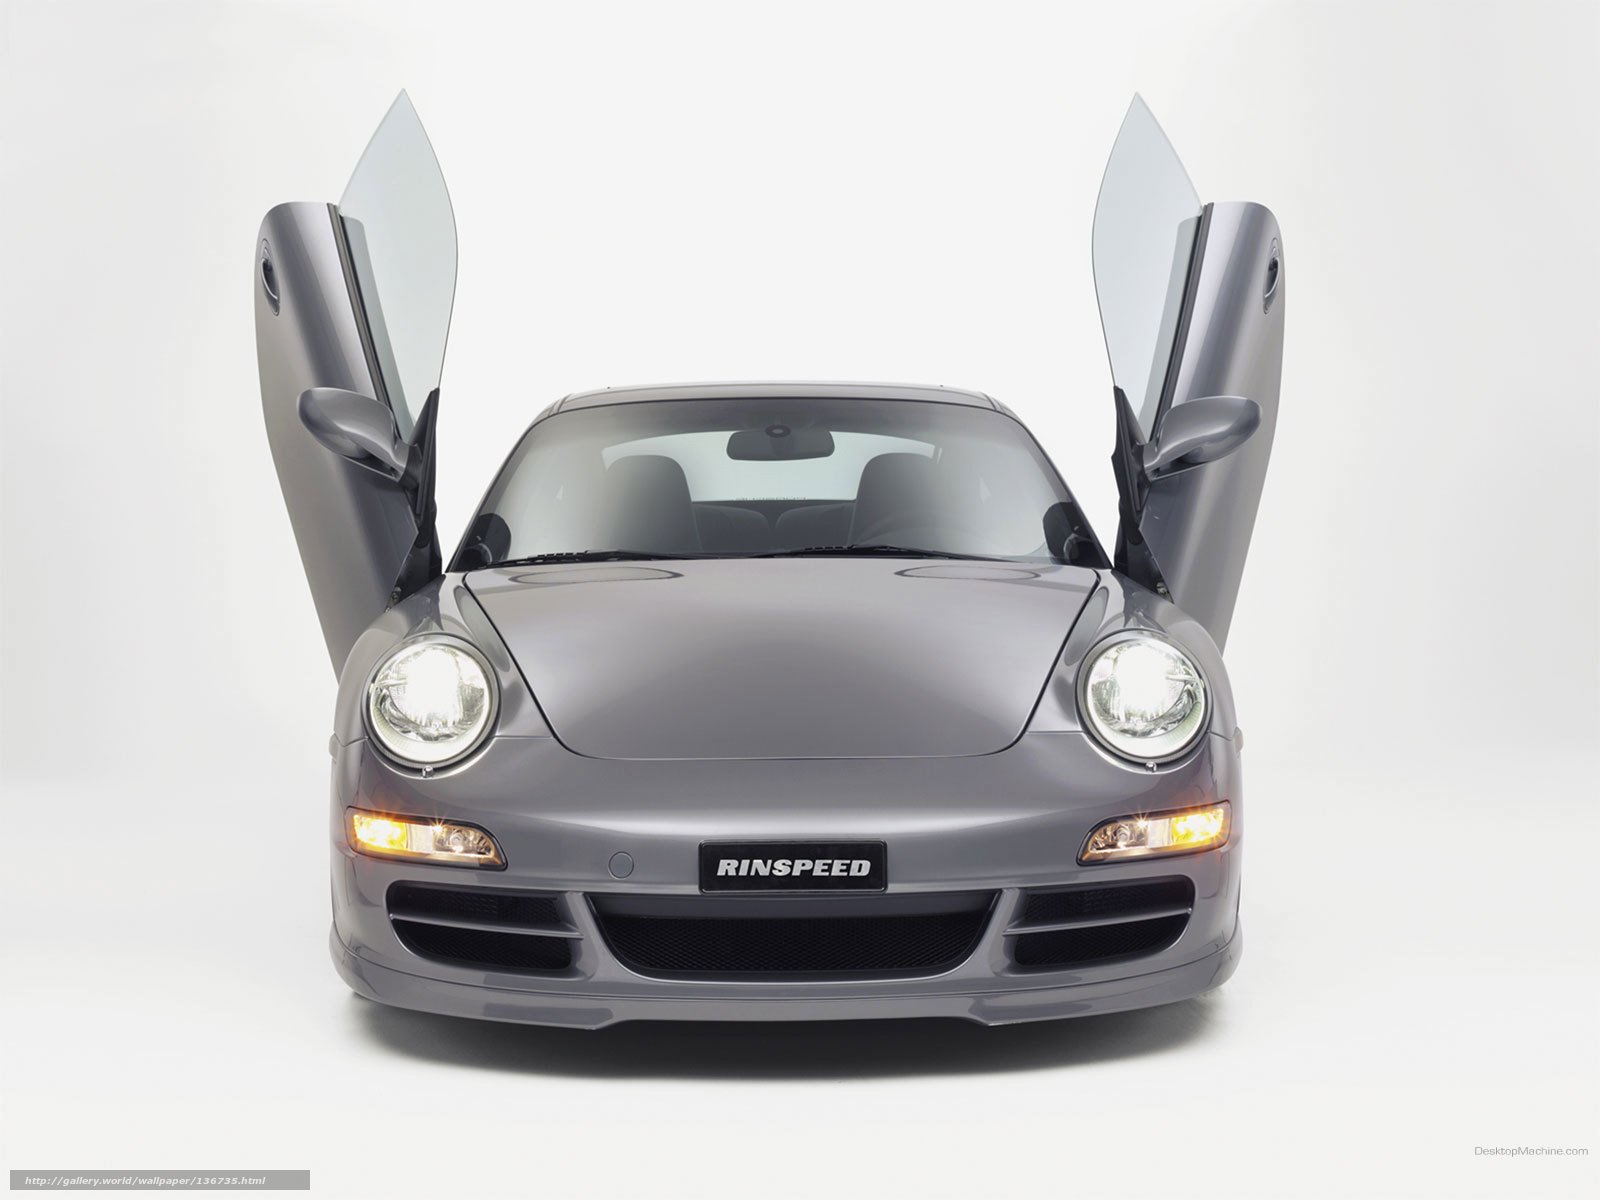 Porsche 911 Rinspeed. Rinspeed Porsche 997. Порше 911 с открытыми дверями. Porsche 911 открытая дверь.